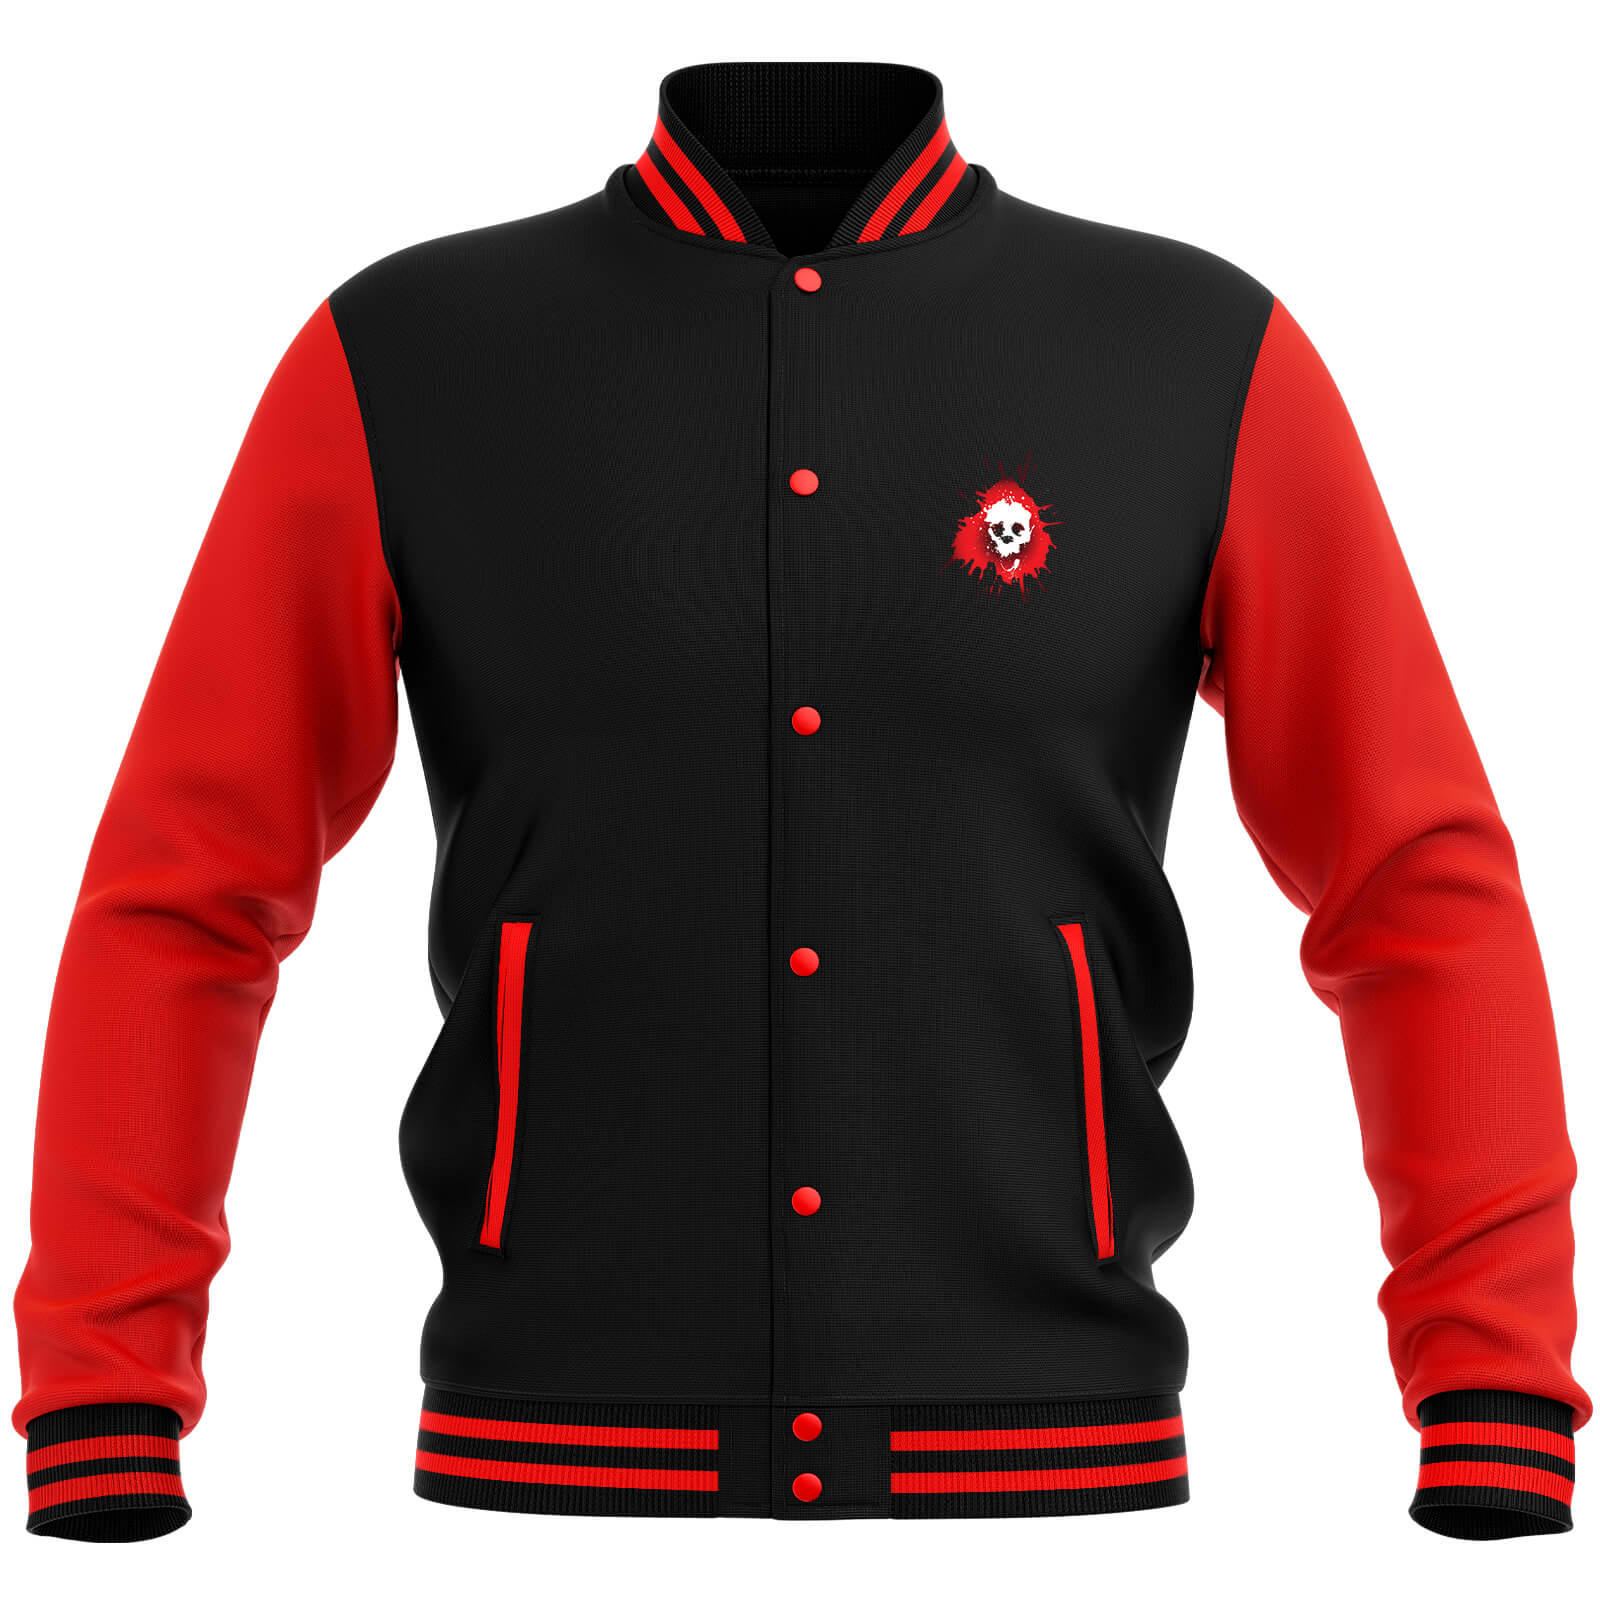 Skullsplat Varsity Jacket - Red/Black - S - Black